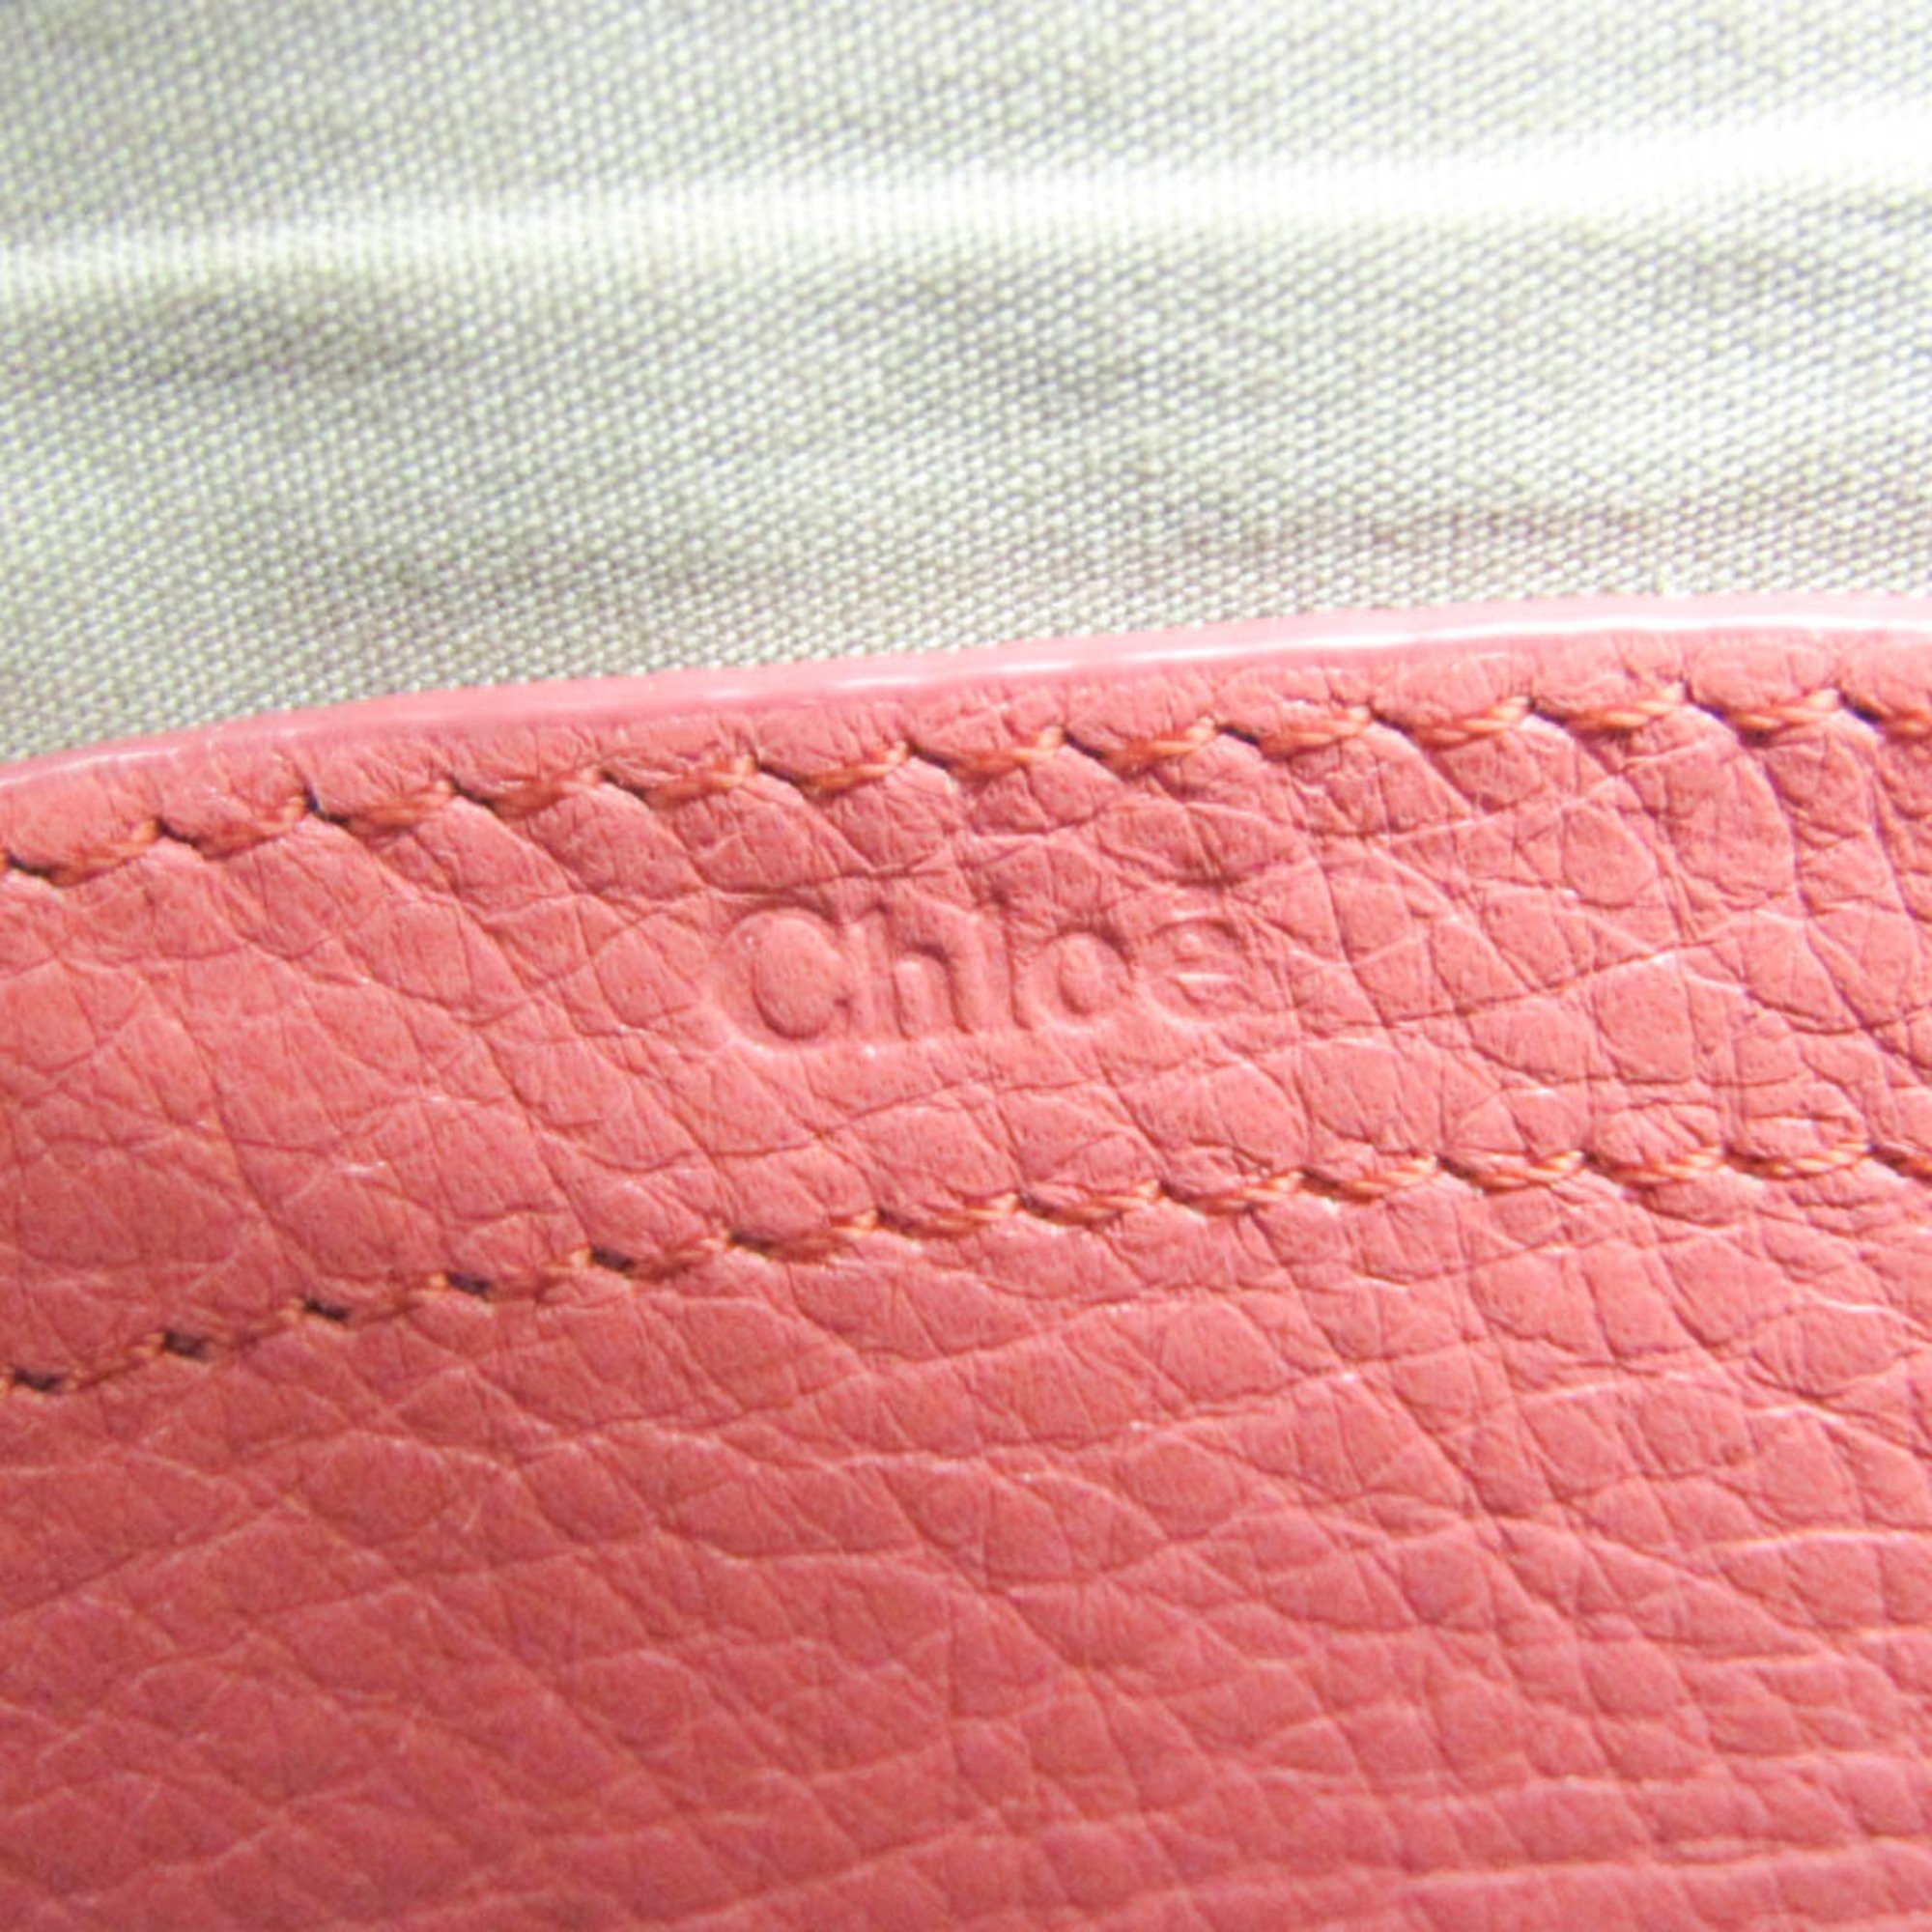 Chloé Lily Women's Leather Shoulder Bag Light Pink